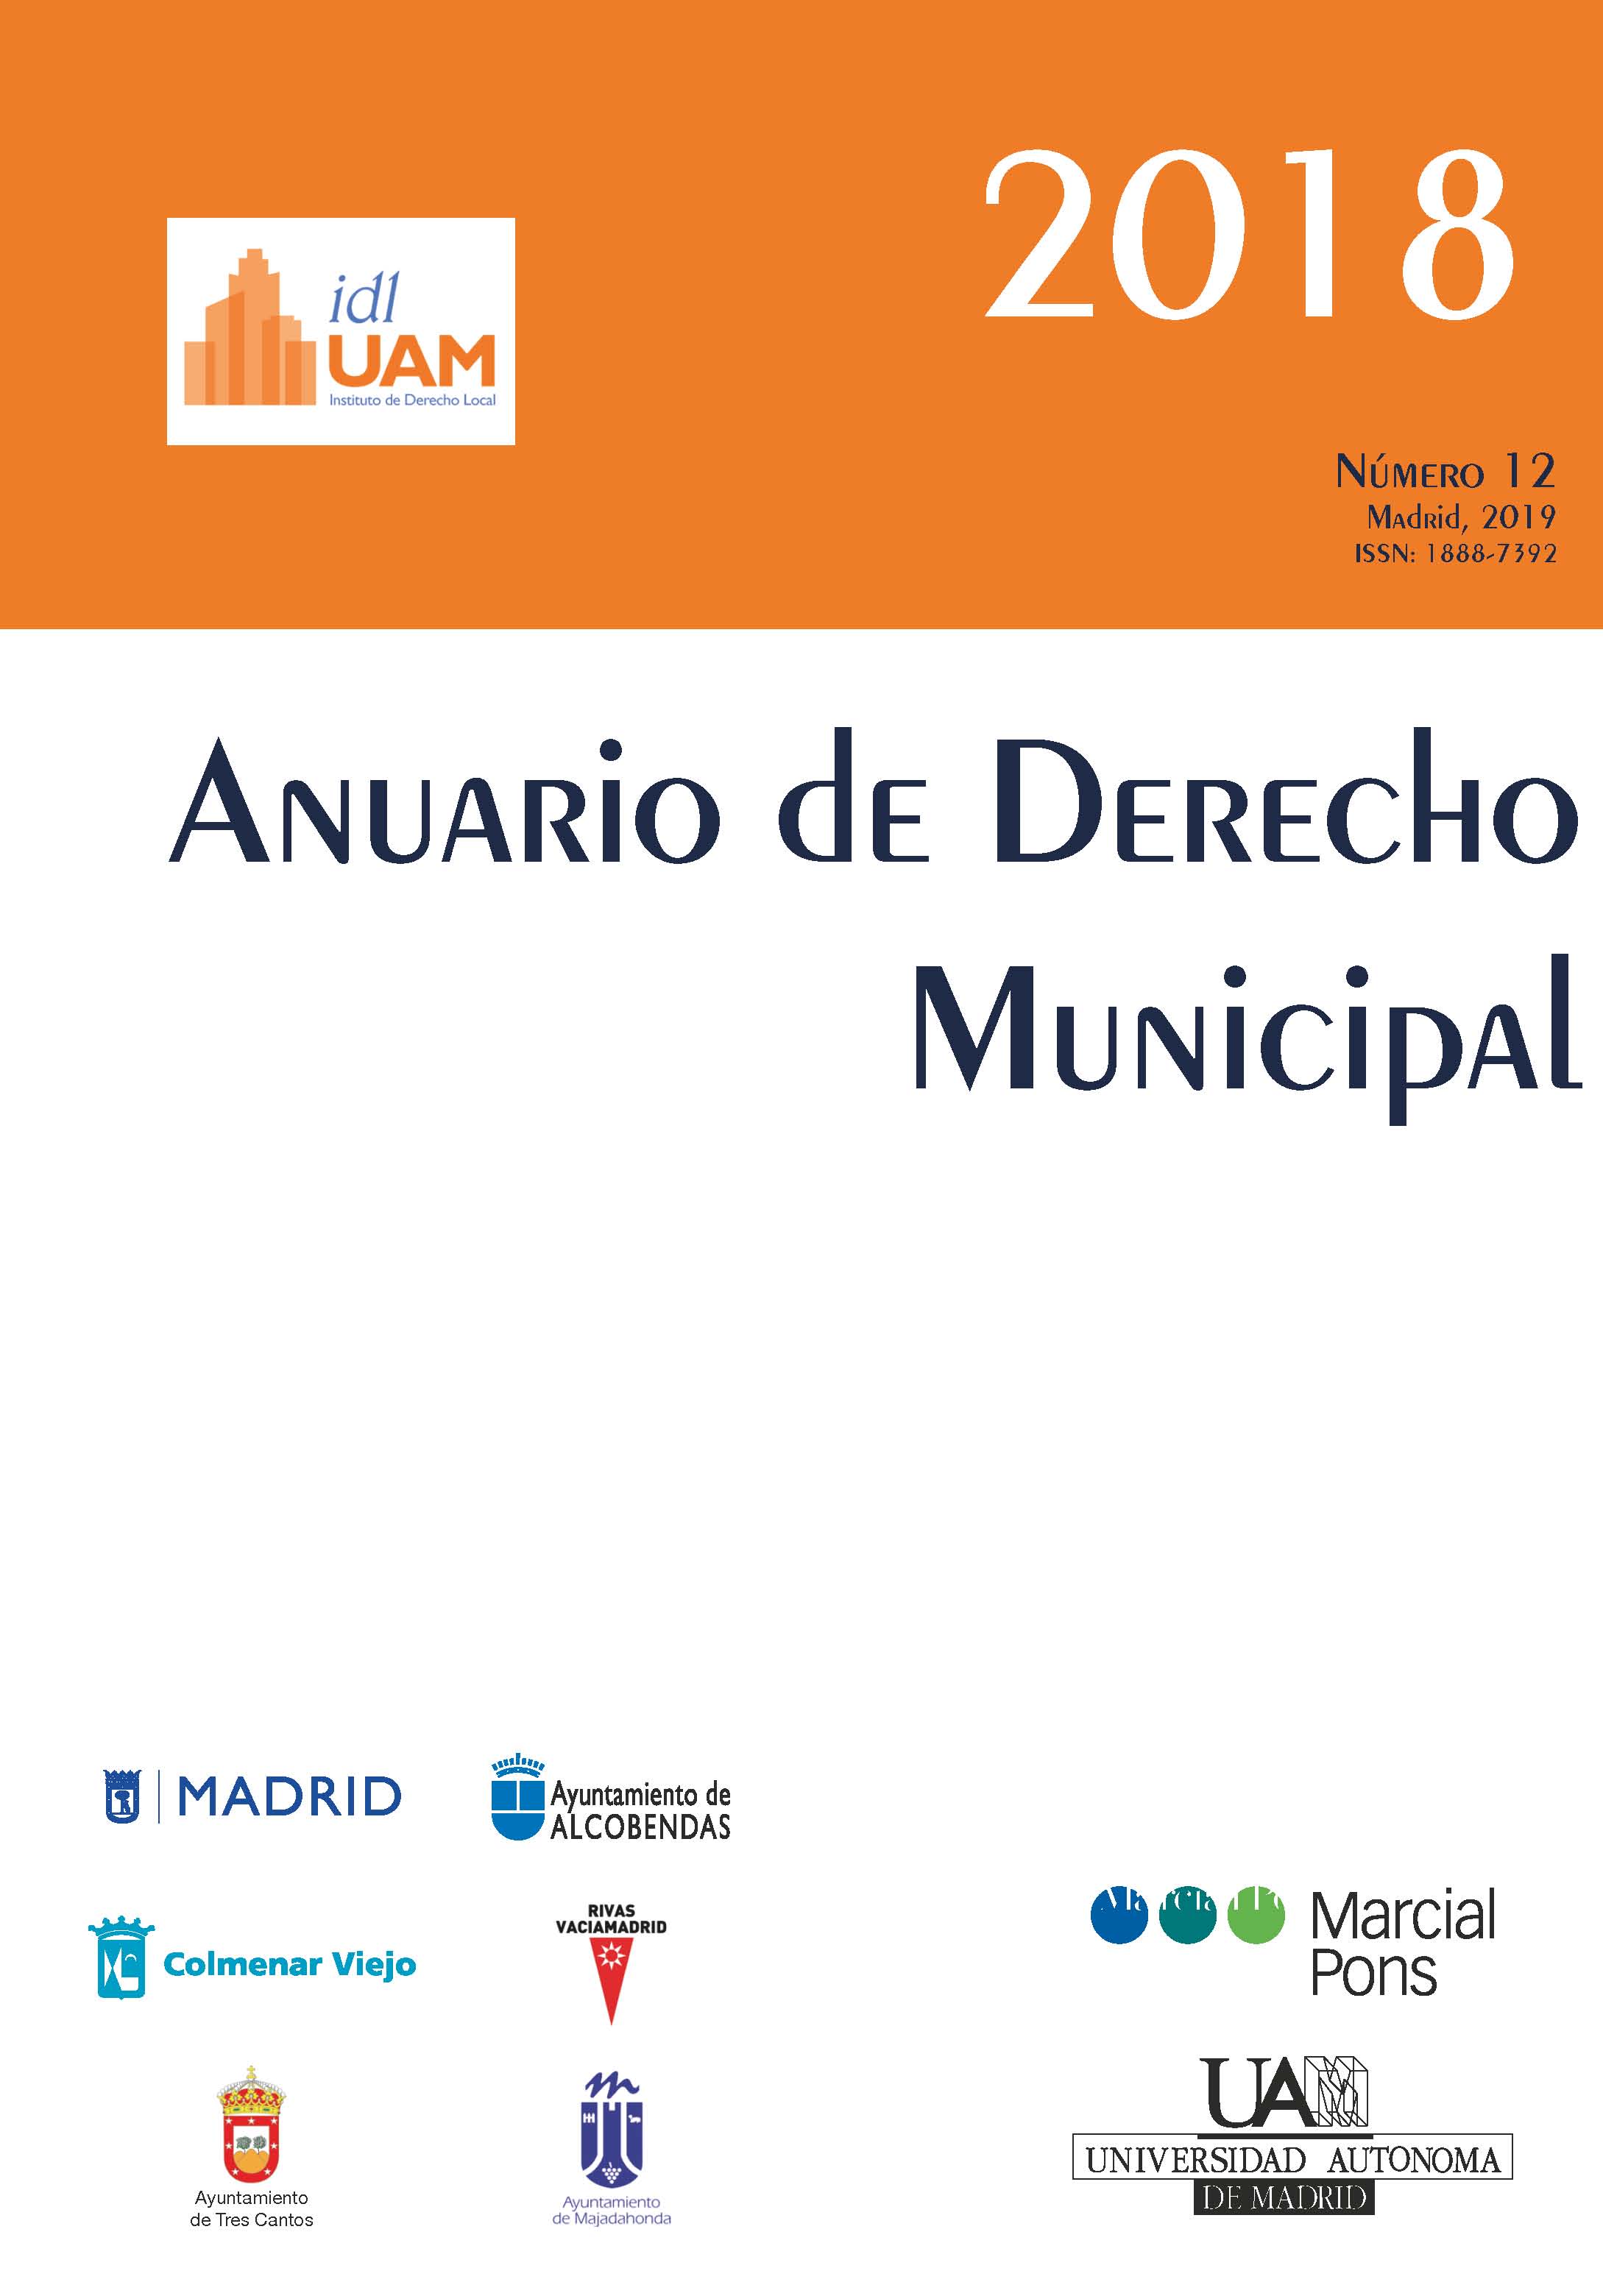 Anuario de Derecho Municipal, Nº 12, año 2018